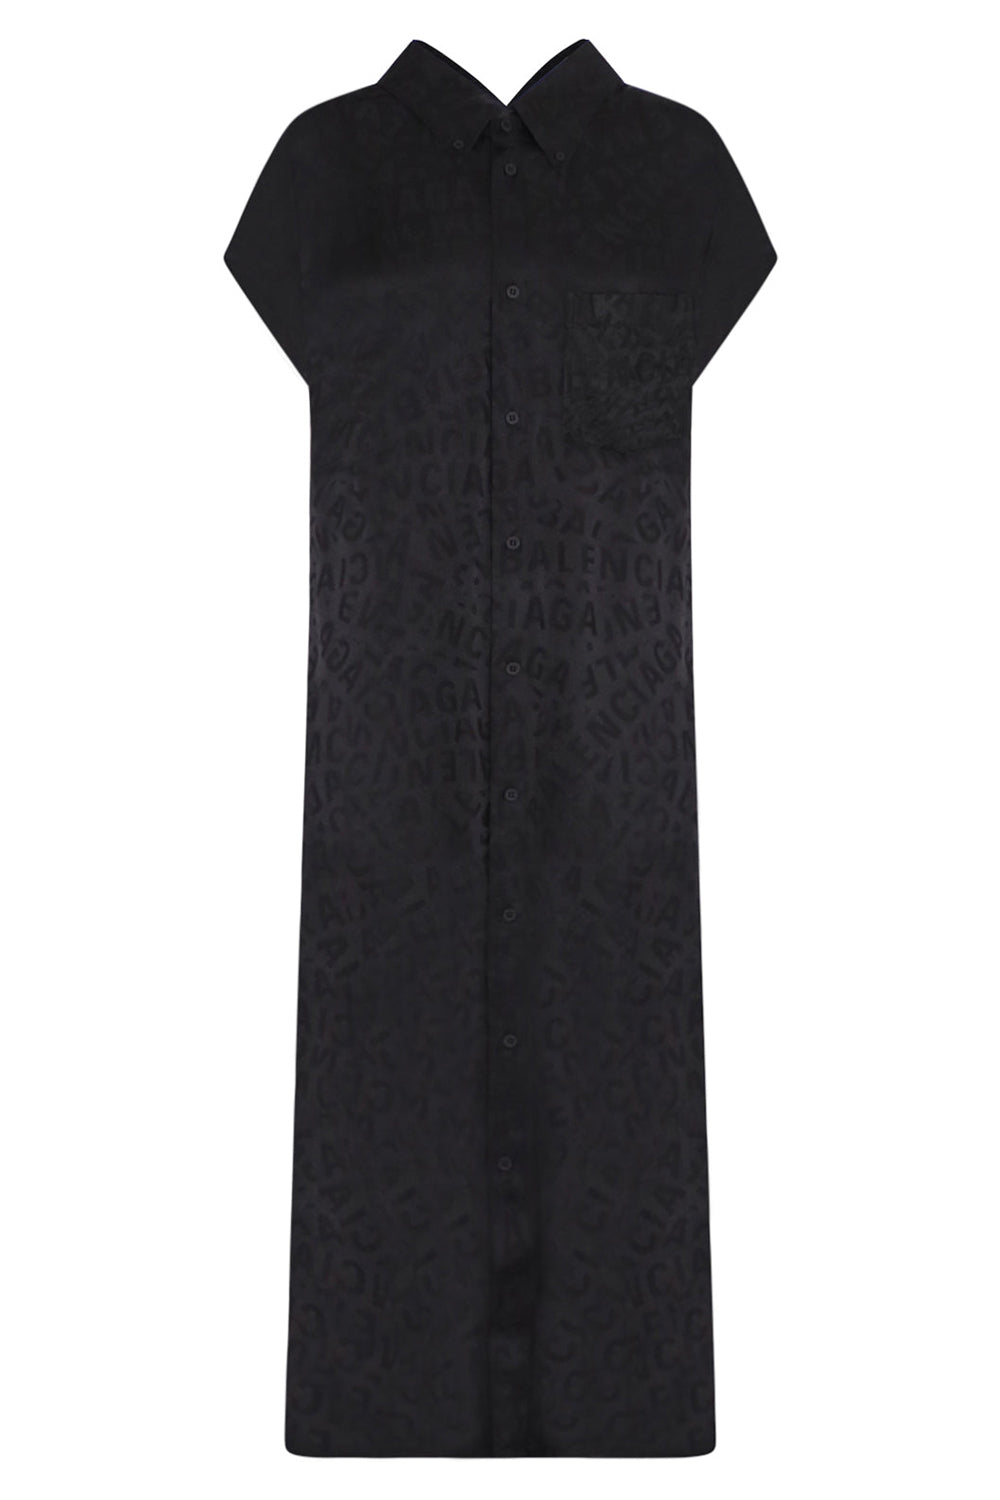 Balenciaga black Jacquard Shirt Dress